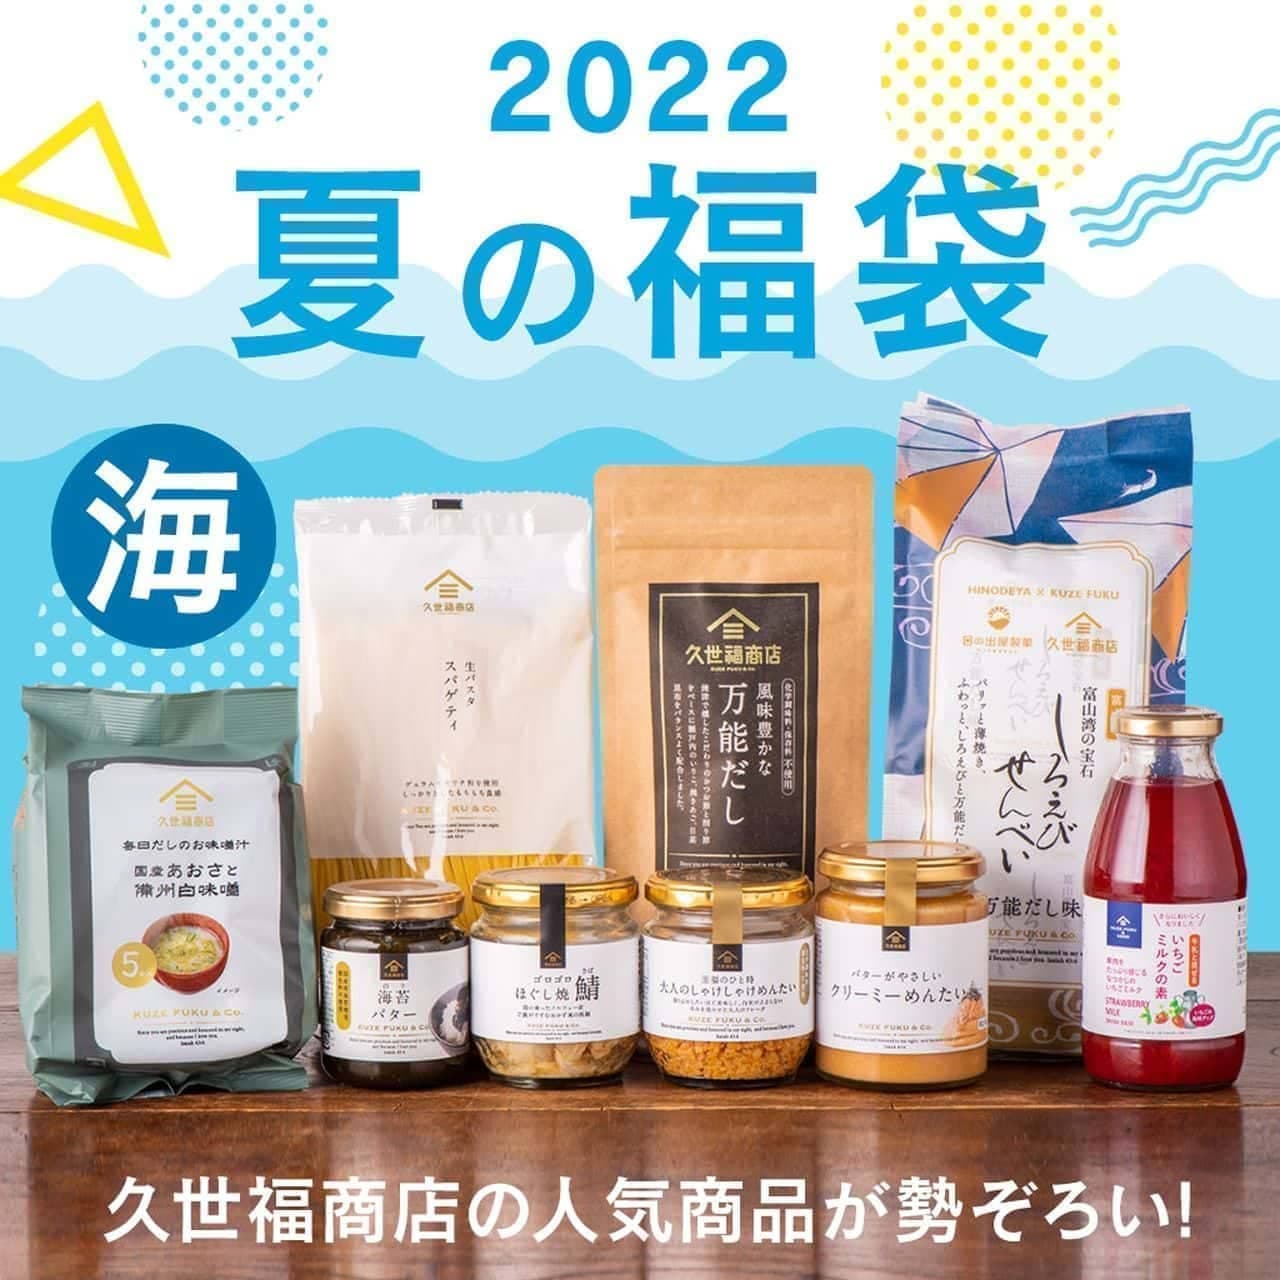 KUZE FUKUCHOTEN official online store "Summer grab bag - sea